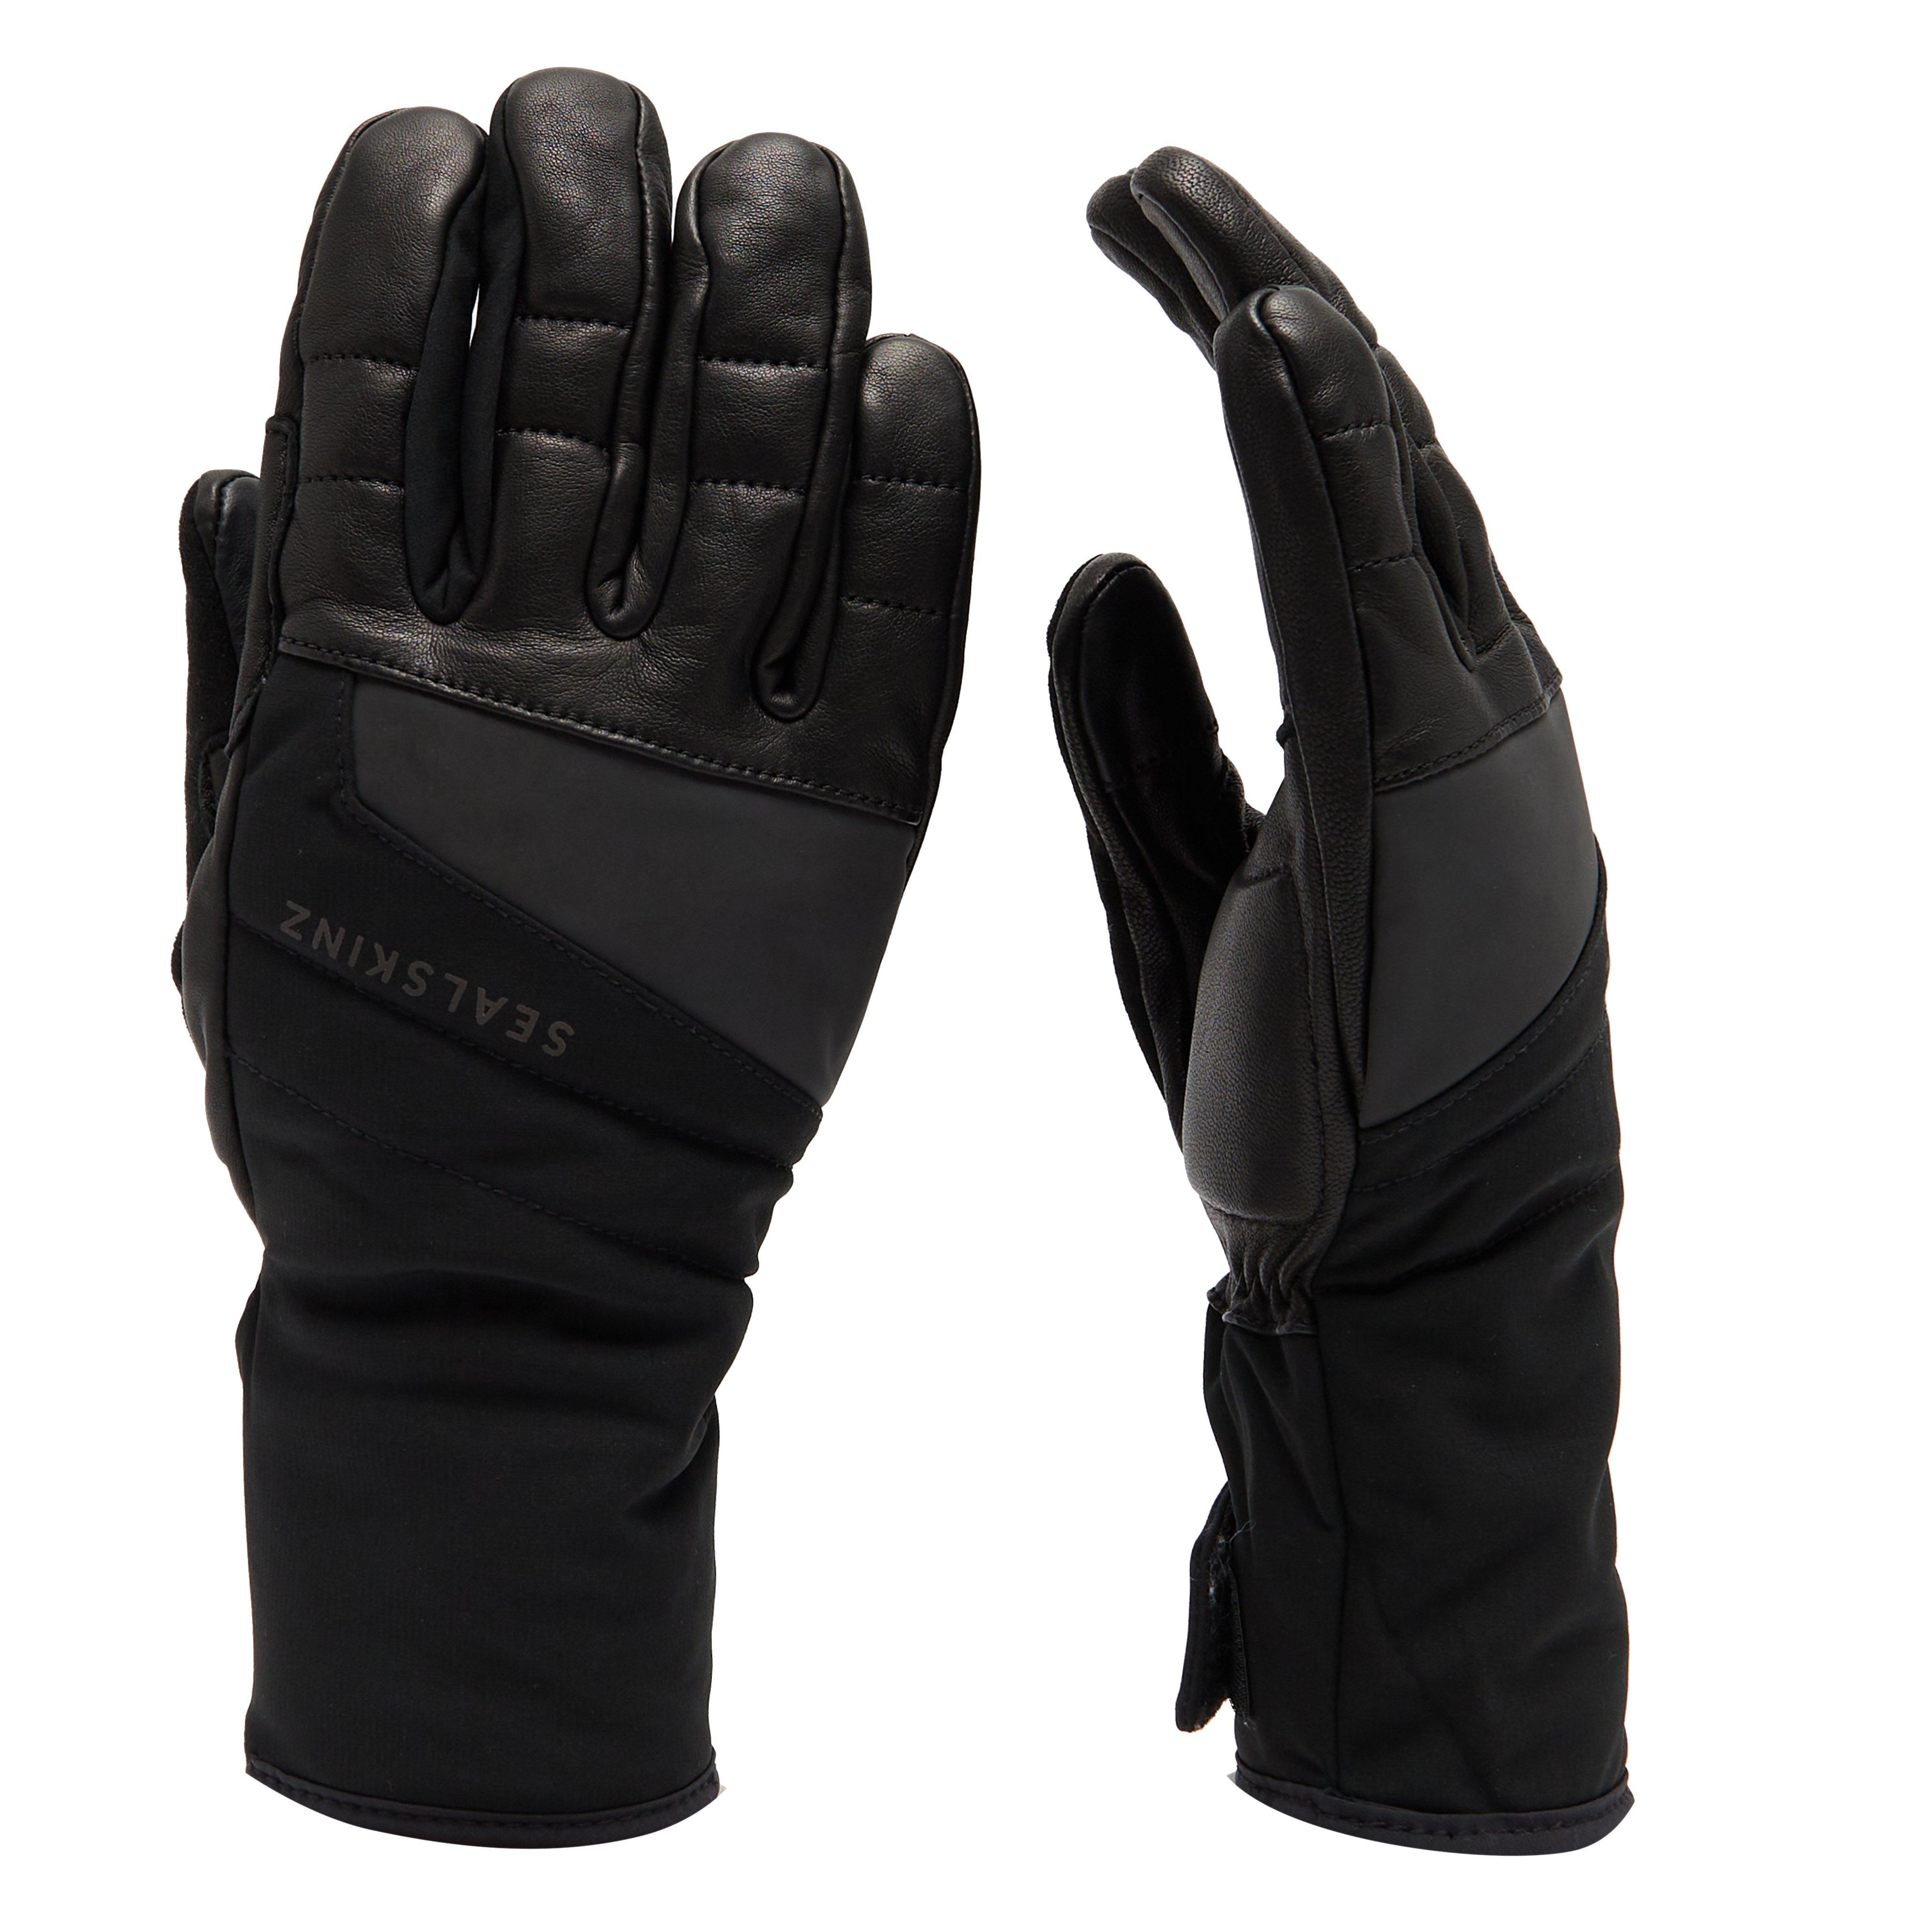 Waterproof Extreme Cold Weather Gauntlet Gloves Black